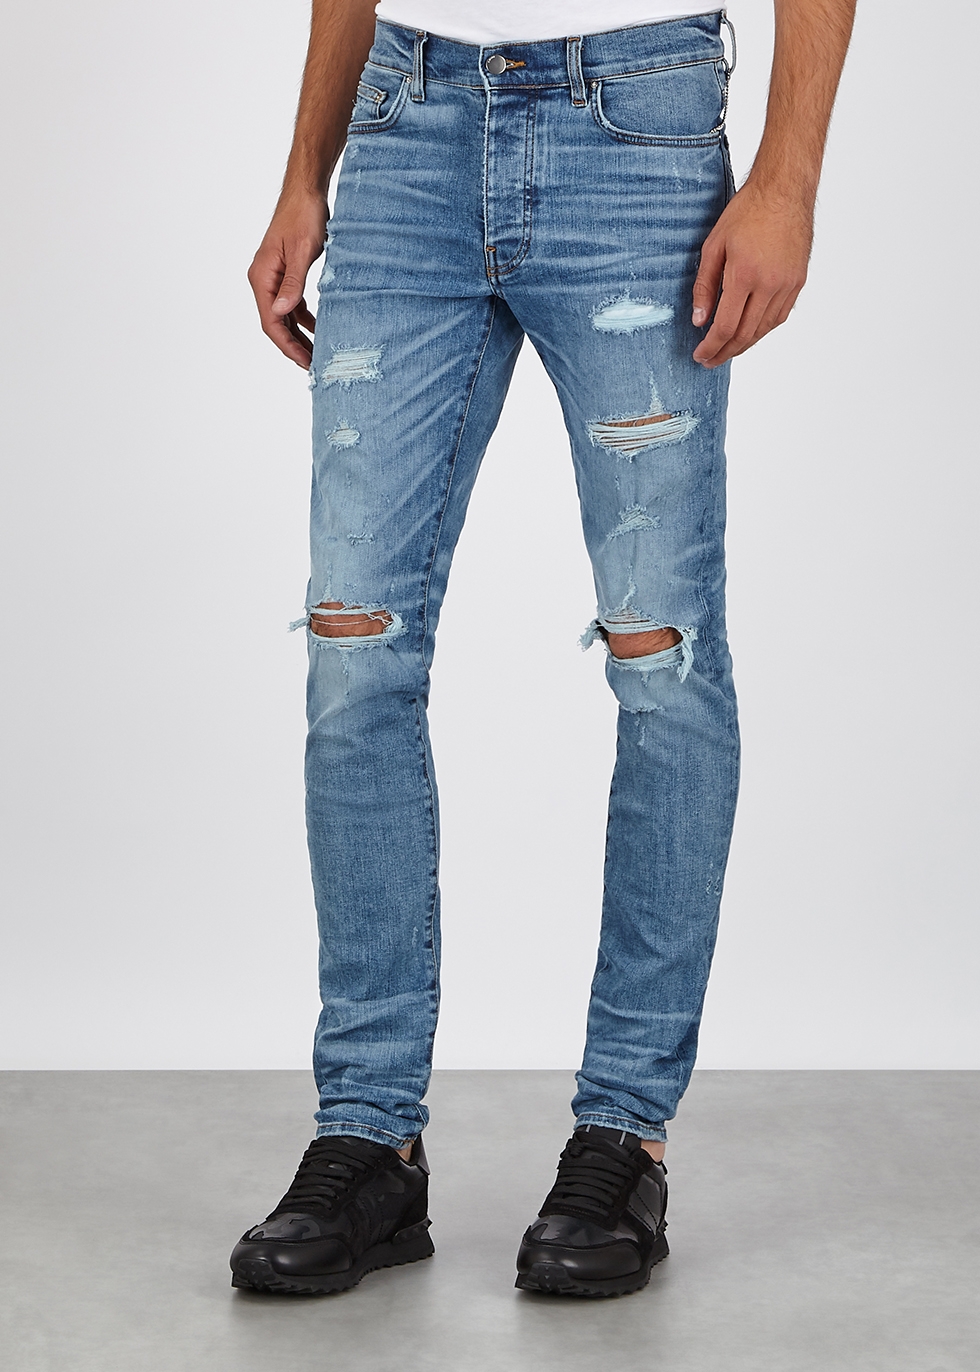 amiri jeans harvey nichols